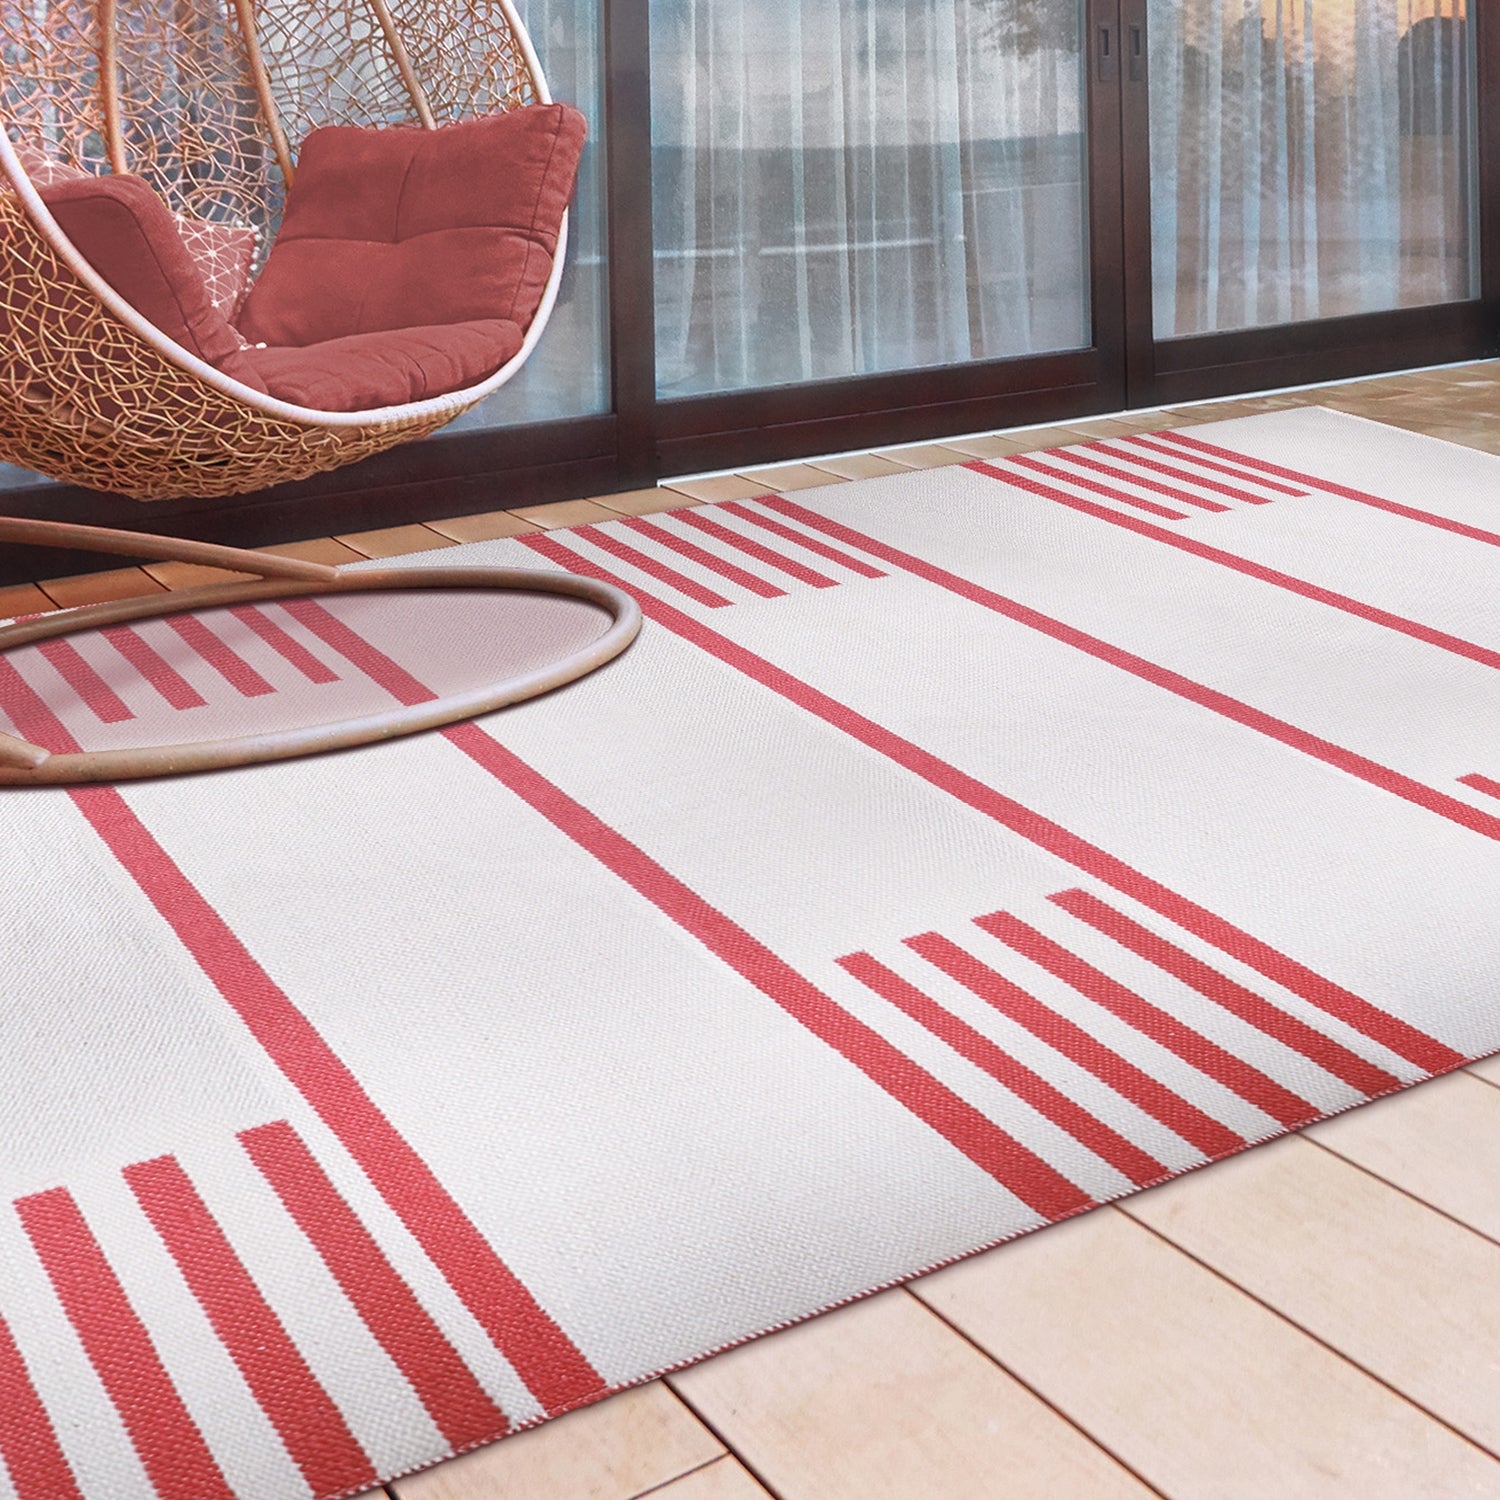 Superior Modern Line Pattern Indoor/ Outdoor Area Rug - Ivory /Red